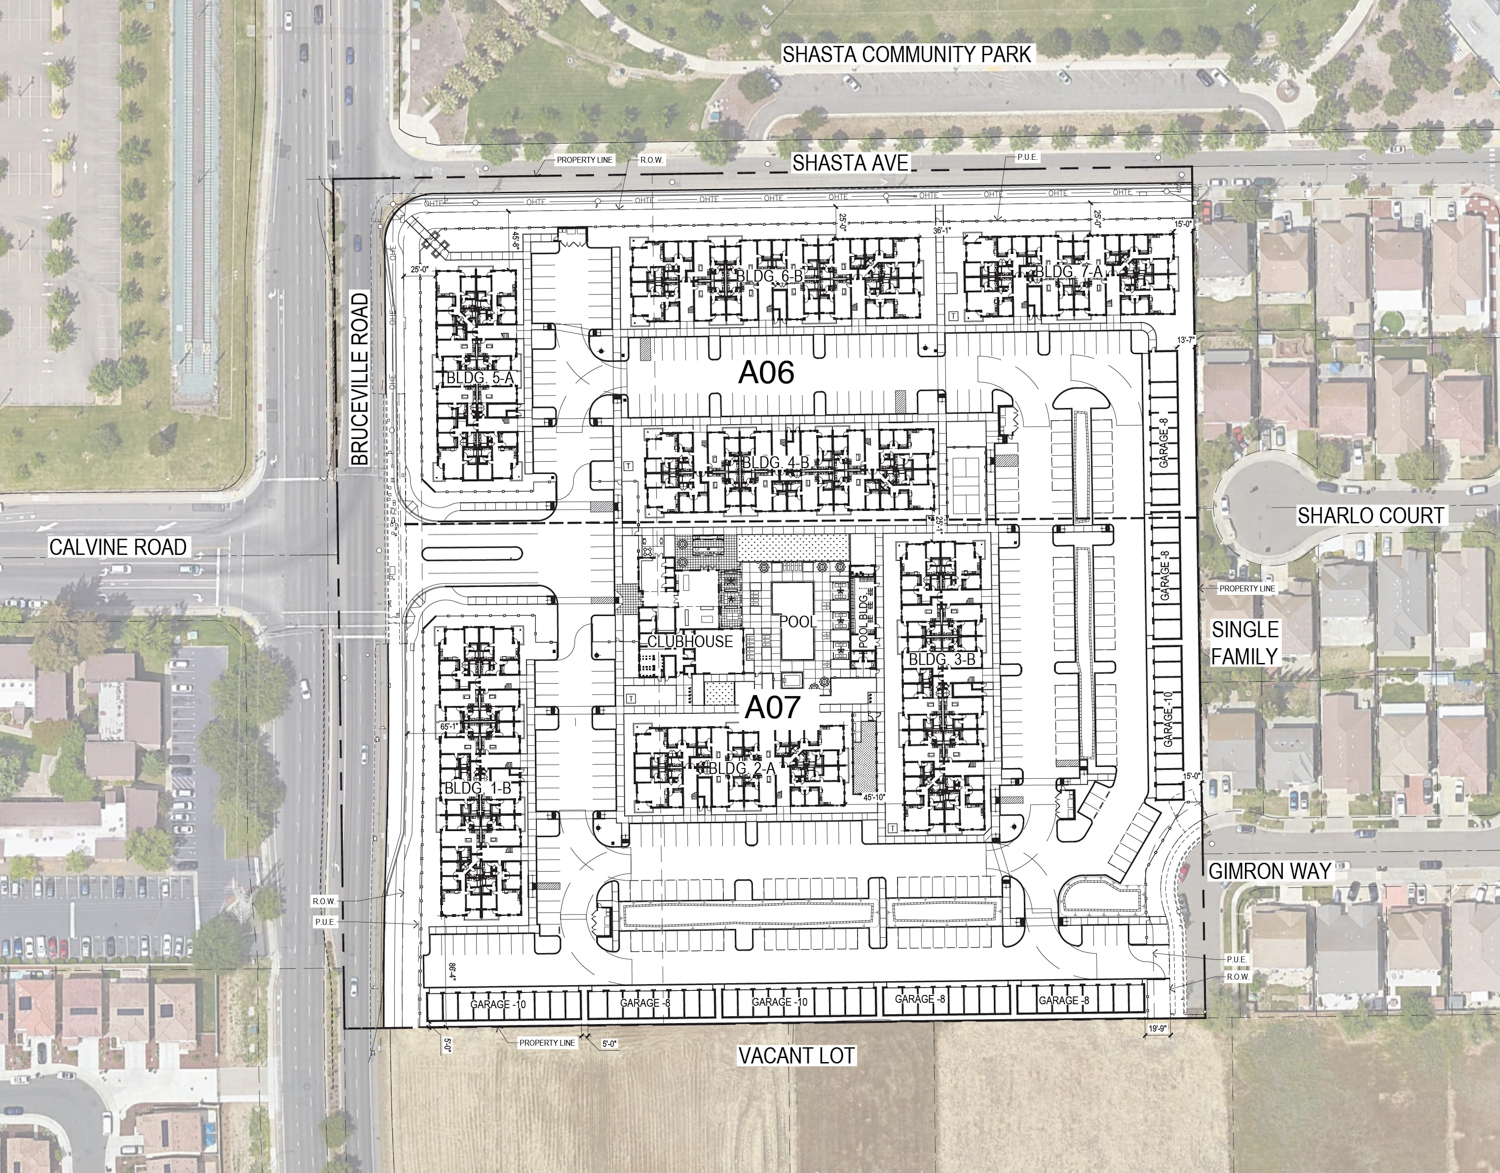 Bruceville Road Apartments at 7400 Shasta Avenue, site map by LPAS Architecture + Design